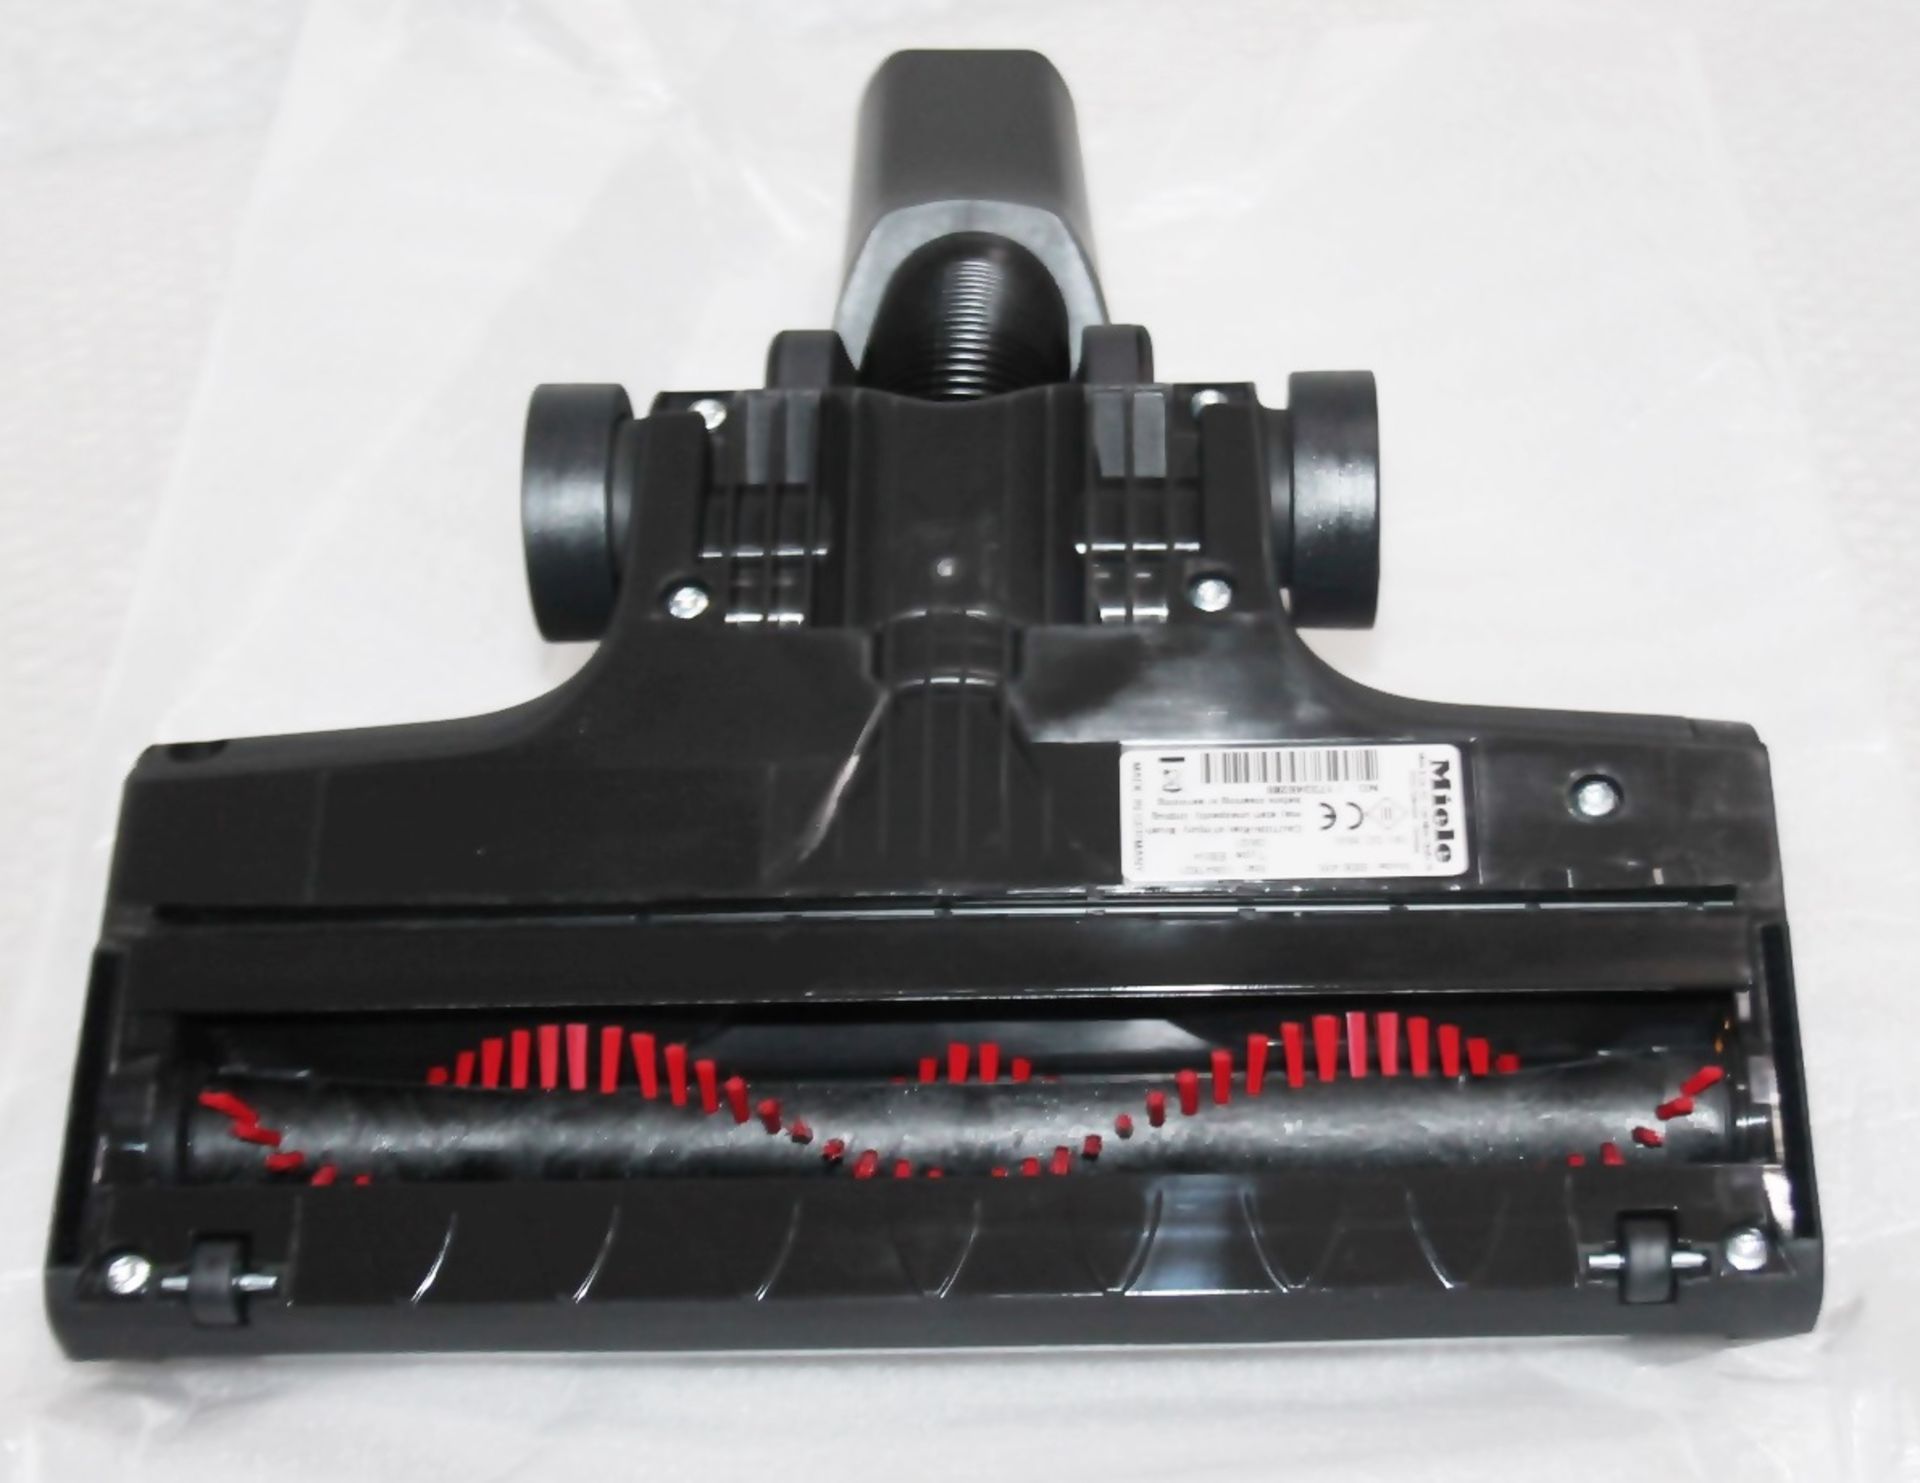 1 x MIELE Triflex HX1 Pro Cordless Vacuum Cleaner - Original Price £580.00 - Boxed Stock - Image 26 of 28